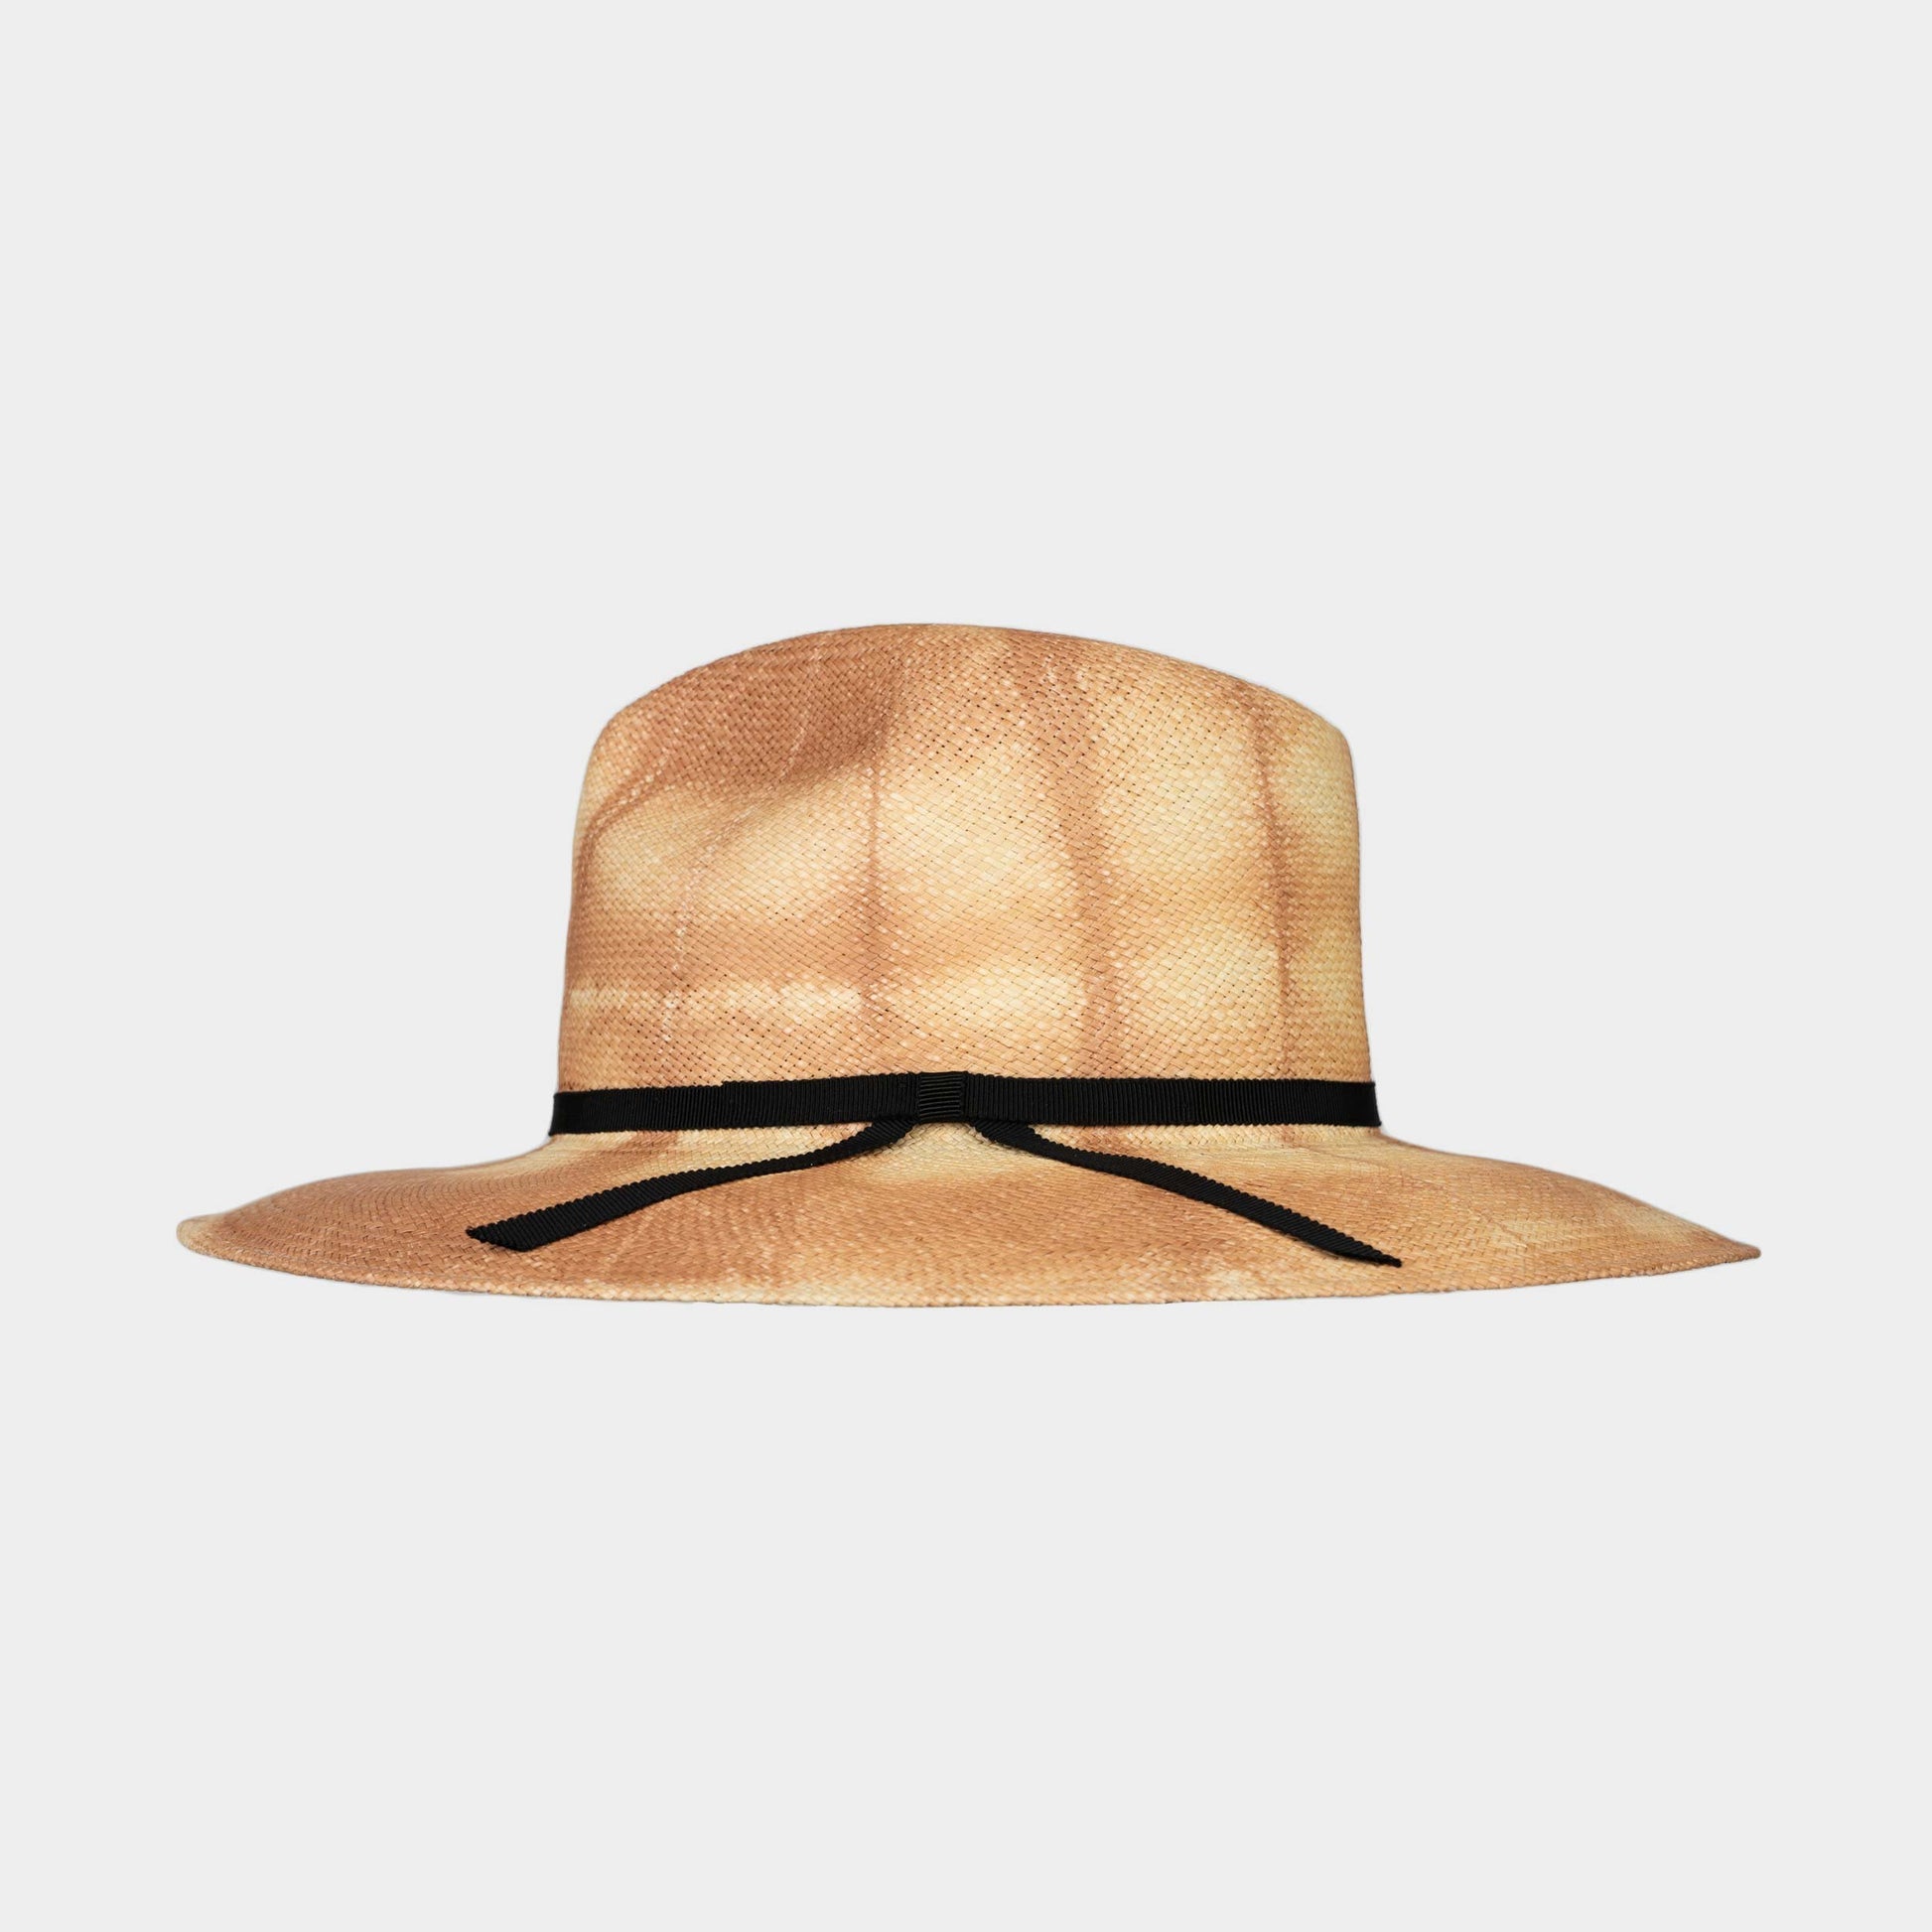 Handwoven Toquilla Straw hat in Dune Tie Dye